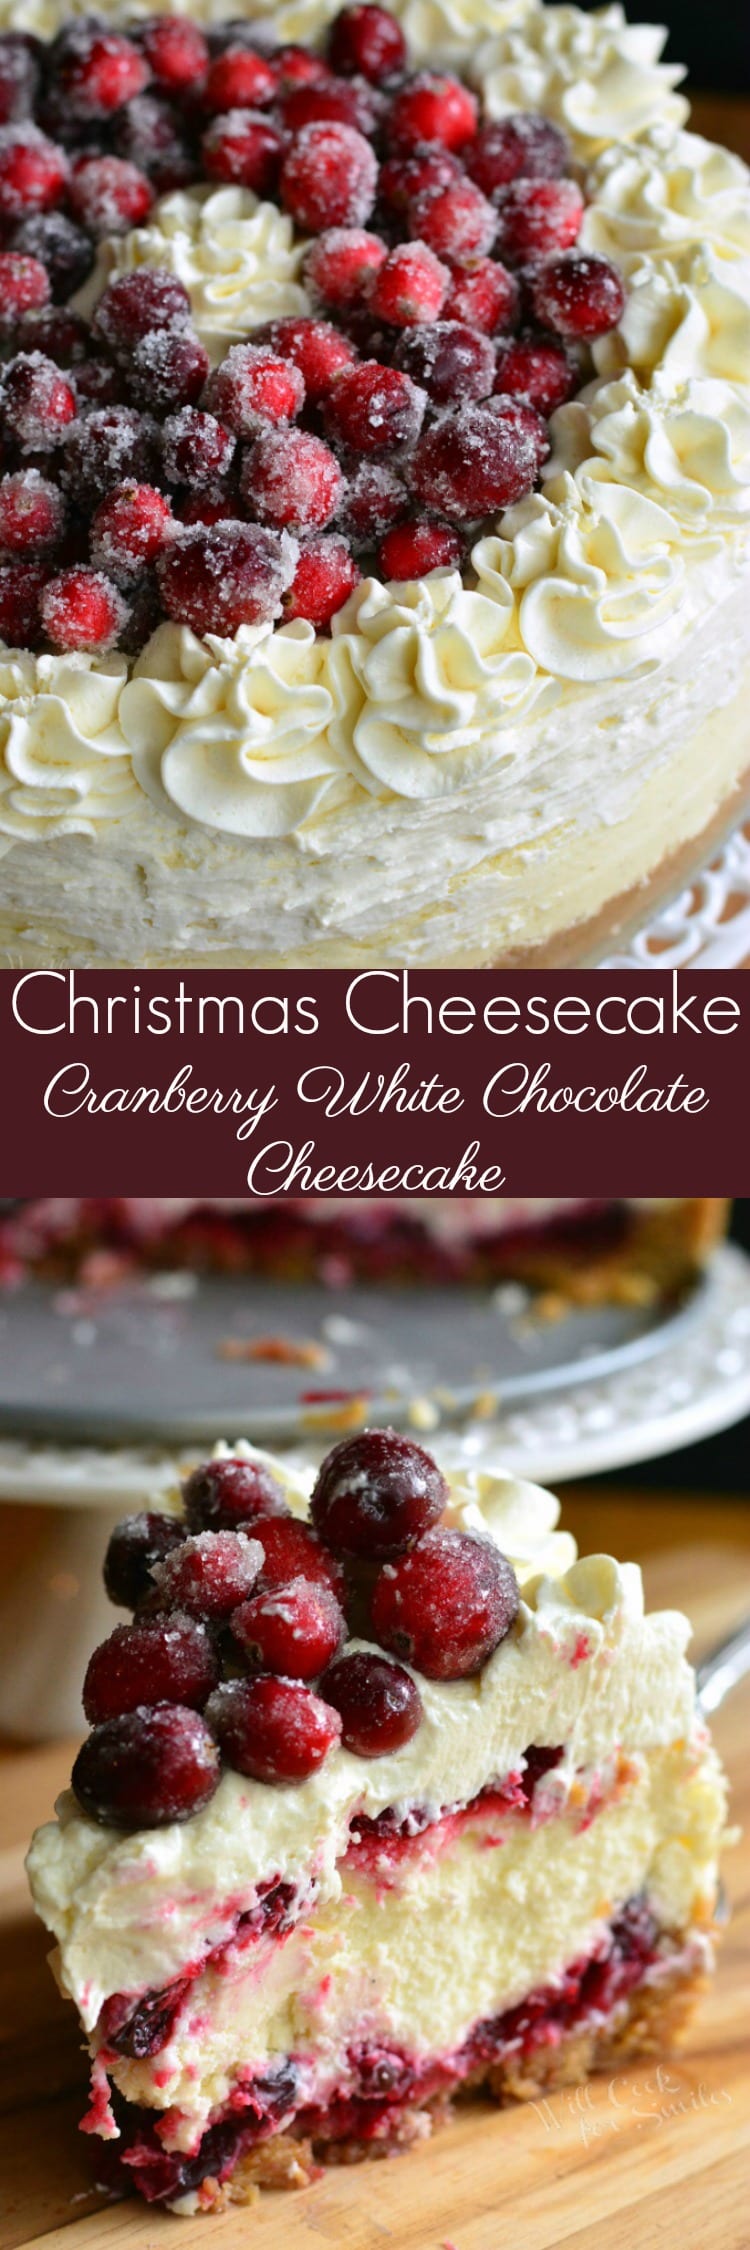 Christmas Cheesecake collage